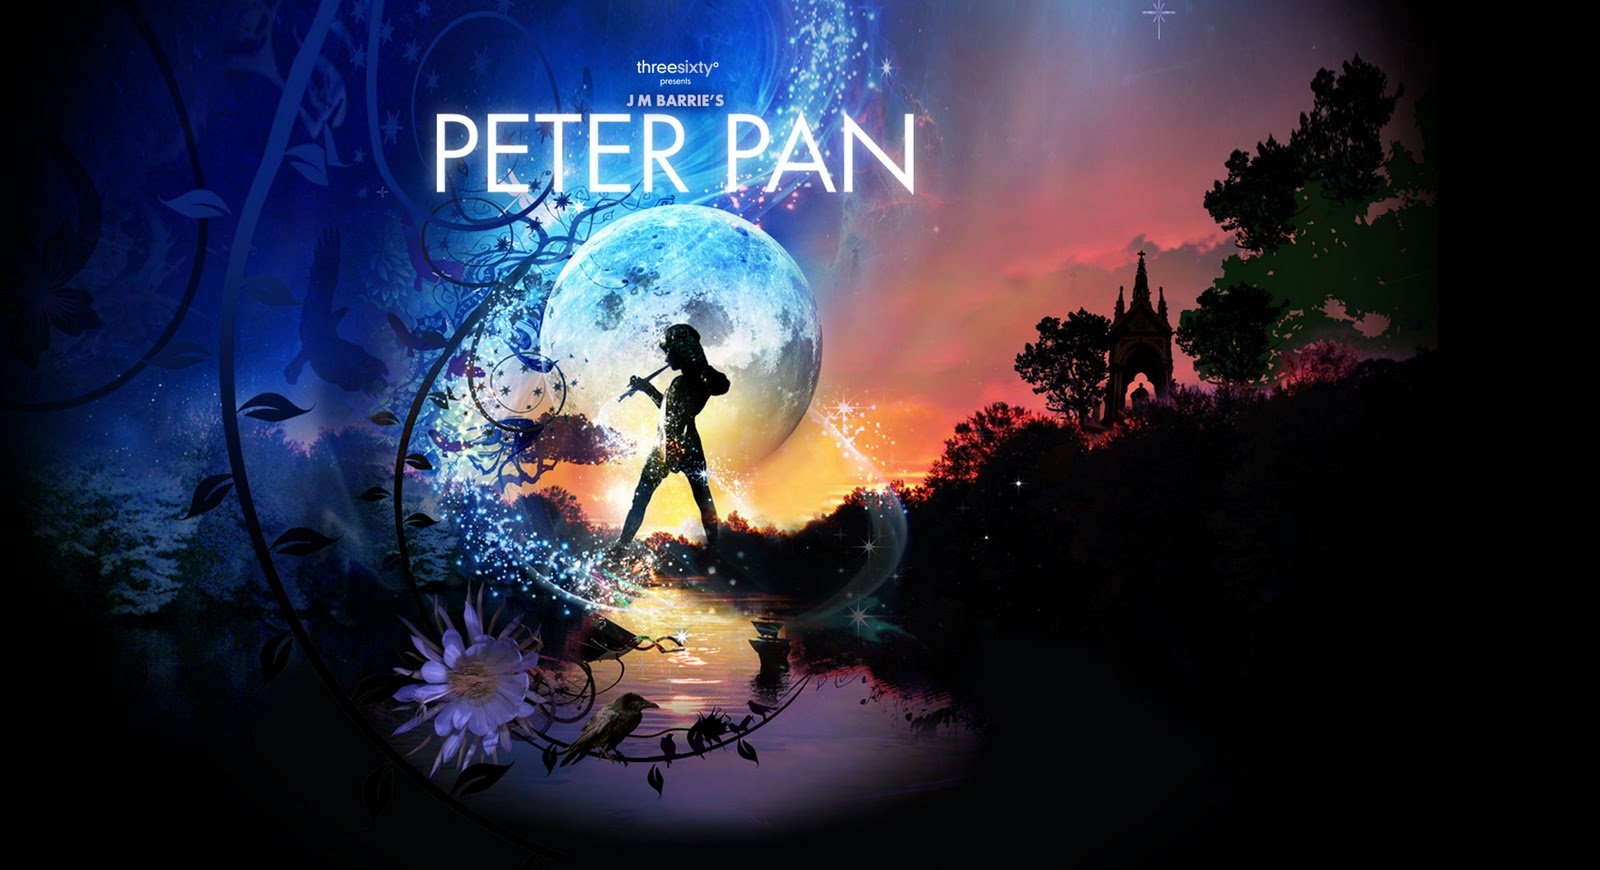 Free Peter Pan Wallpaper, Peter Pan Wallpaper Download